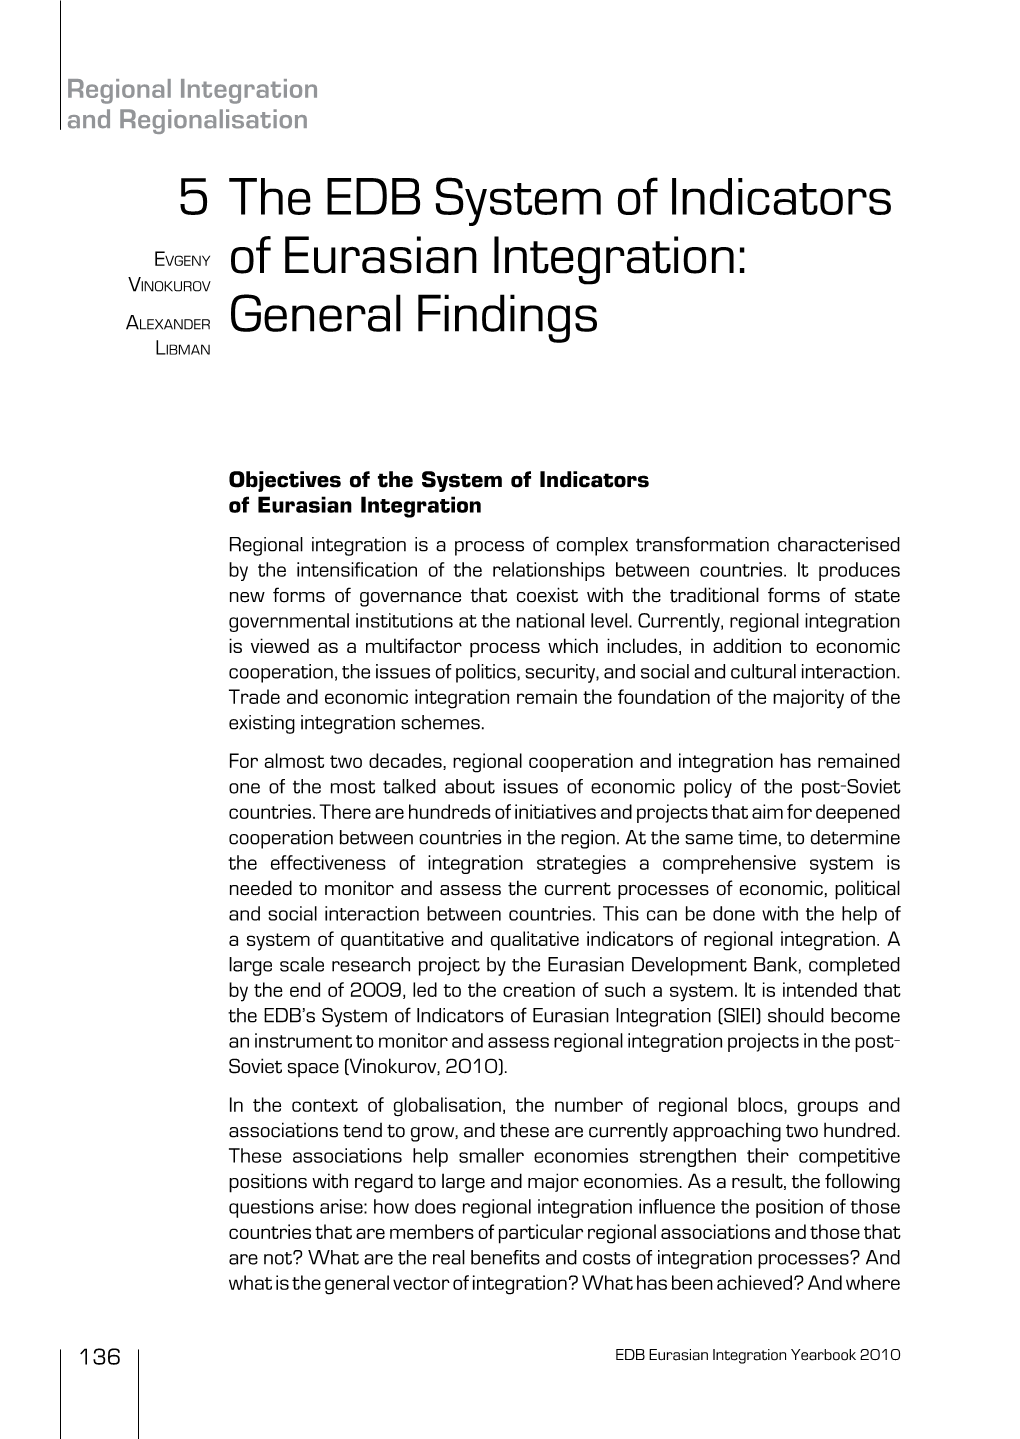 The EDB System of Indicators of Eurasian Integration: General